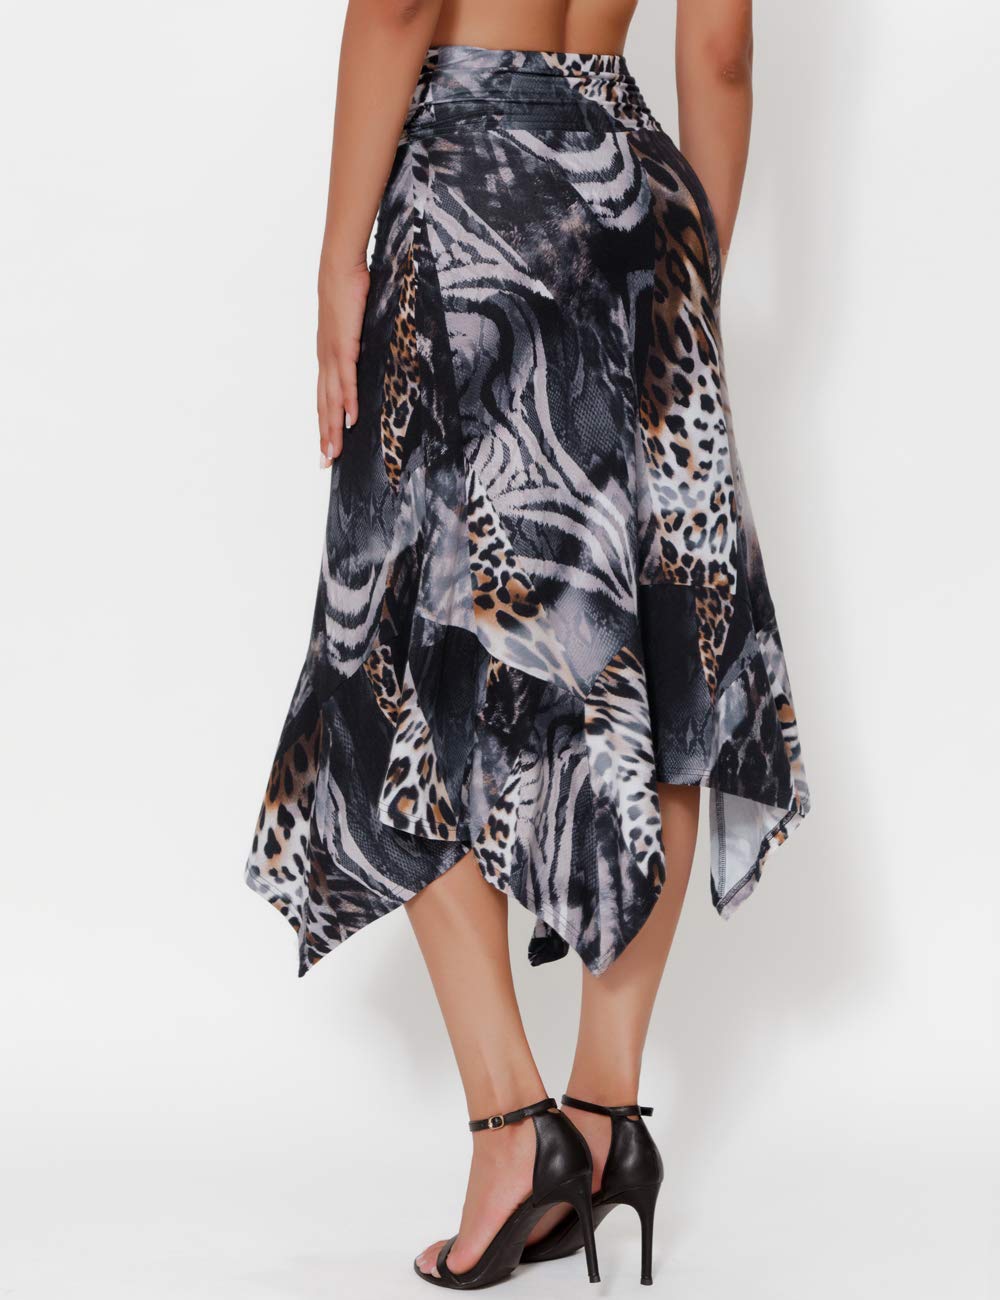 DJT Leopard Print Flowy Women's Handkerchief Hemline Midi Skirt